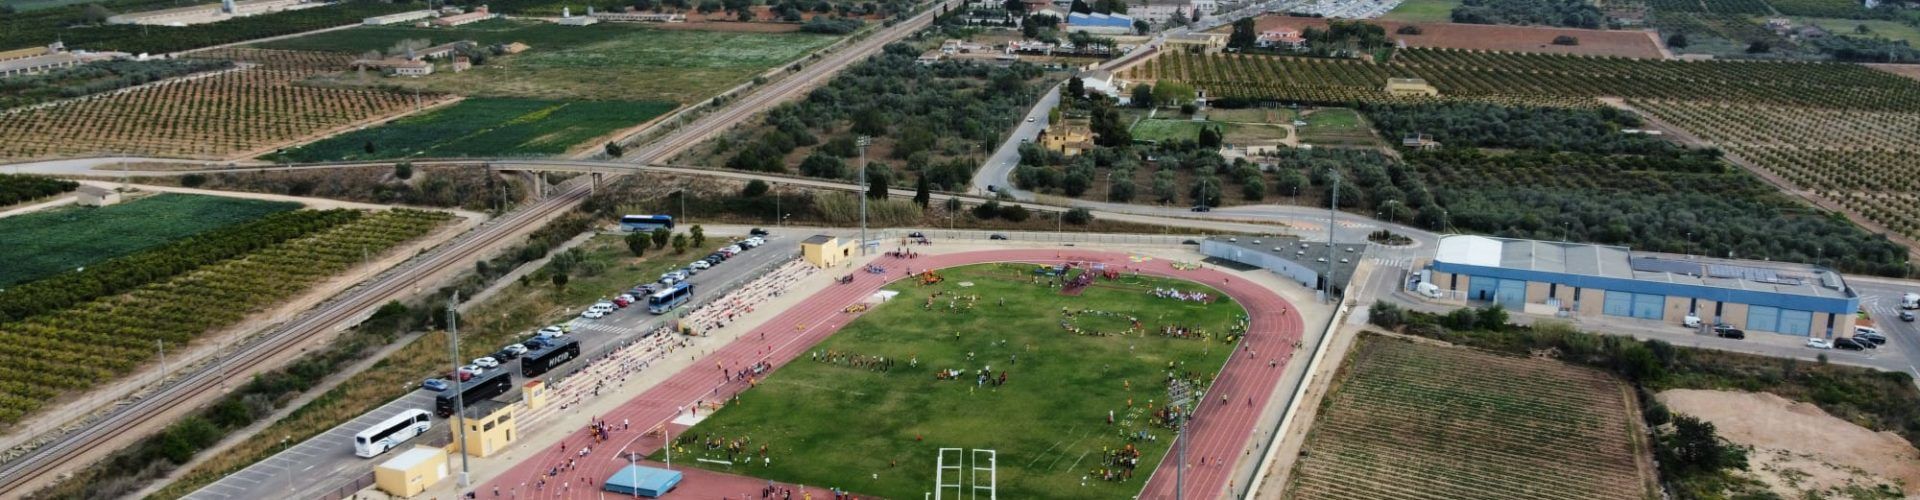 Jornada d’atletisme comarcal a la pista de Vinaròs, a vista de dron